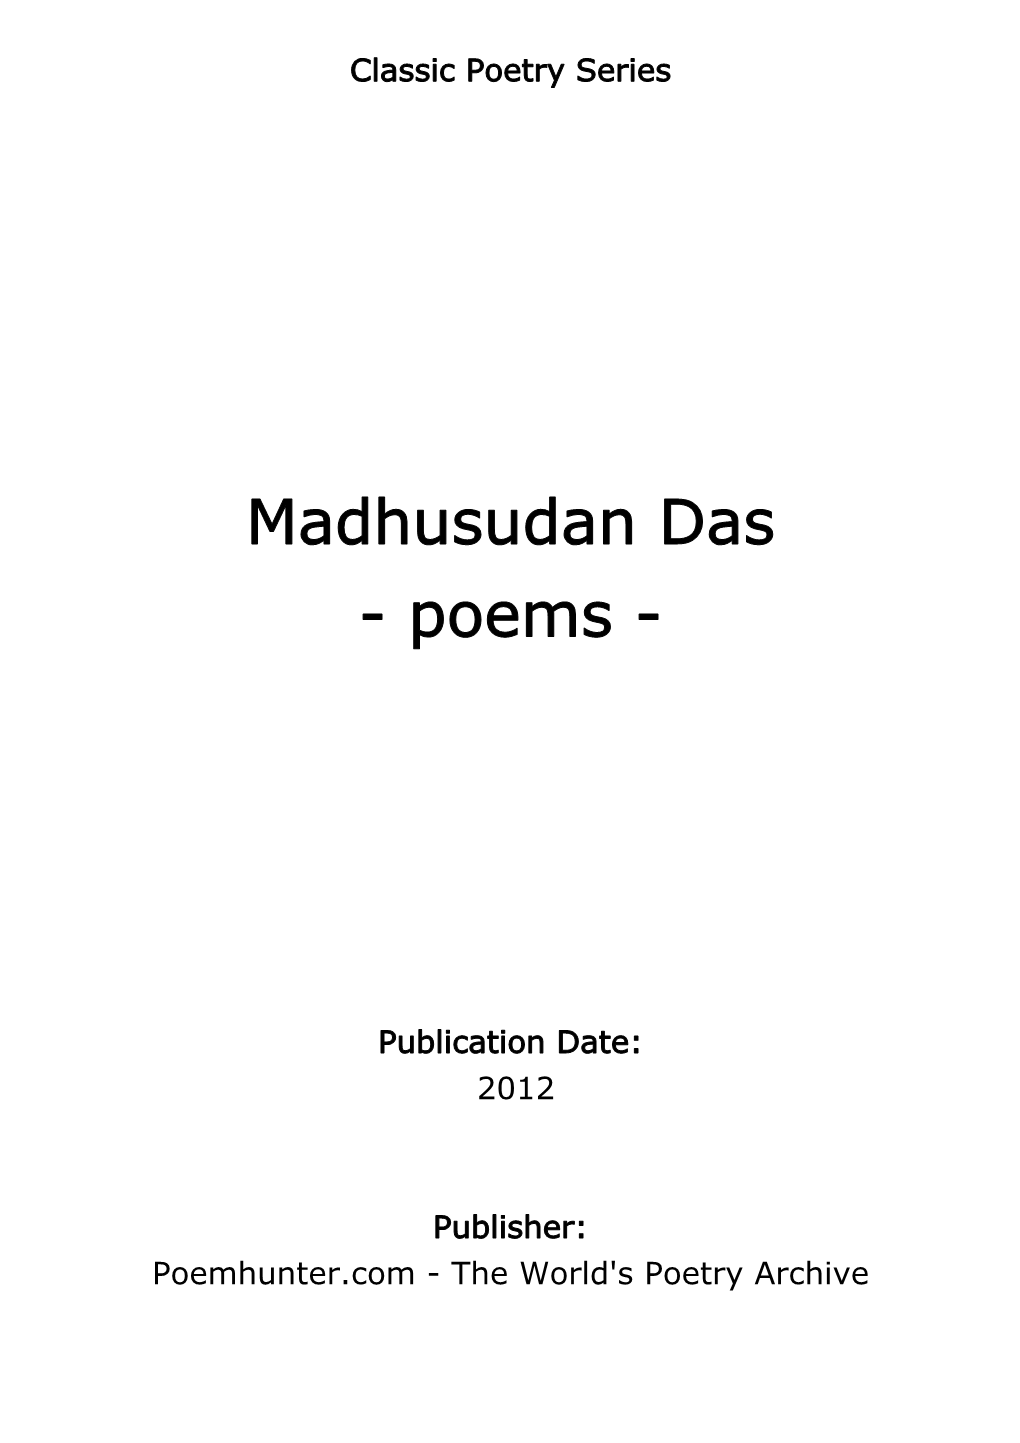 Madhusudan Das - Poems